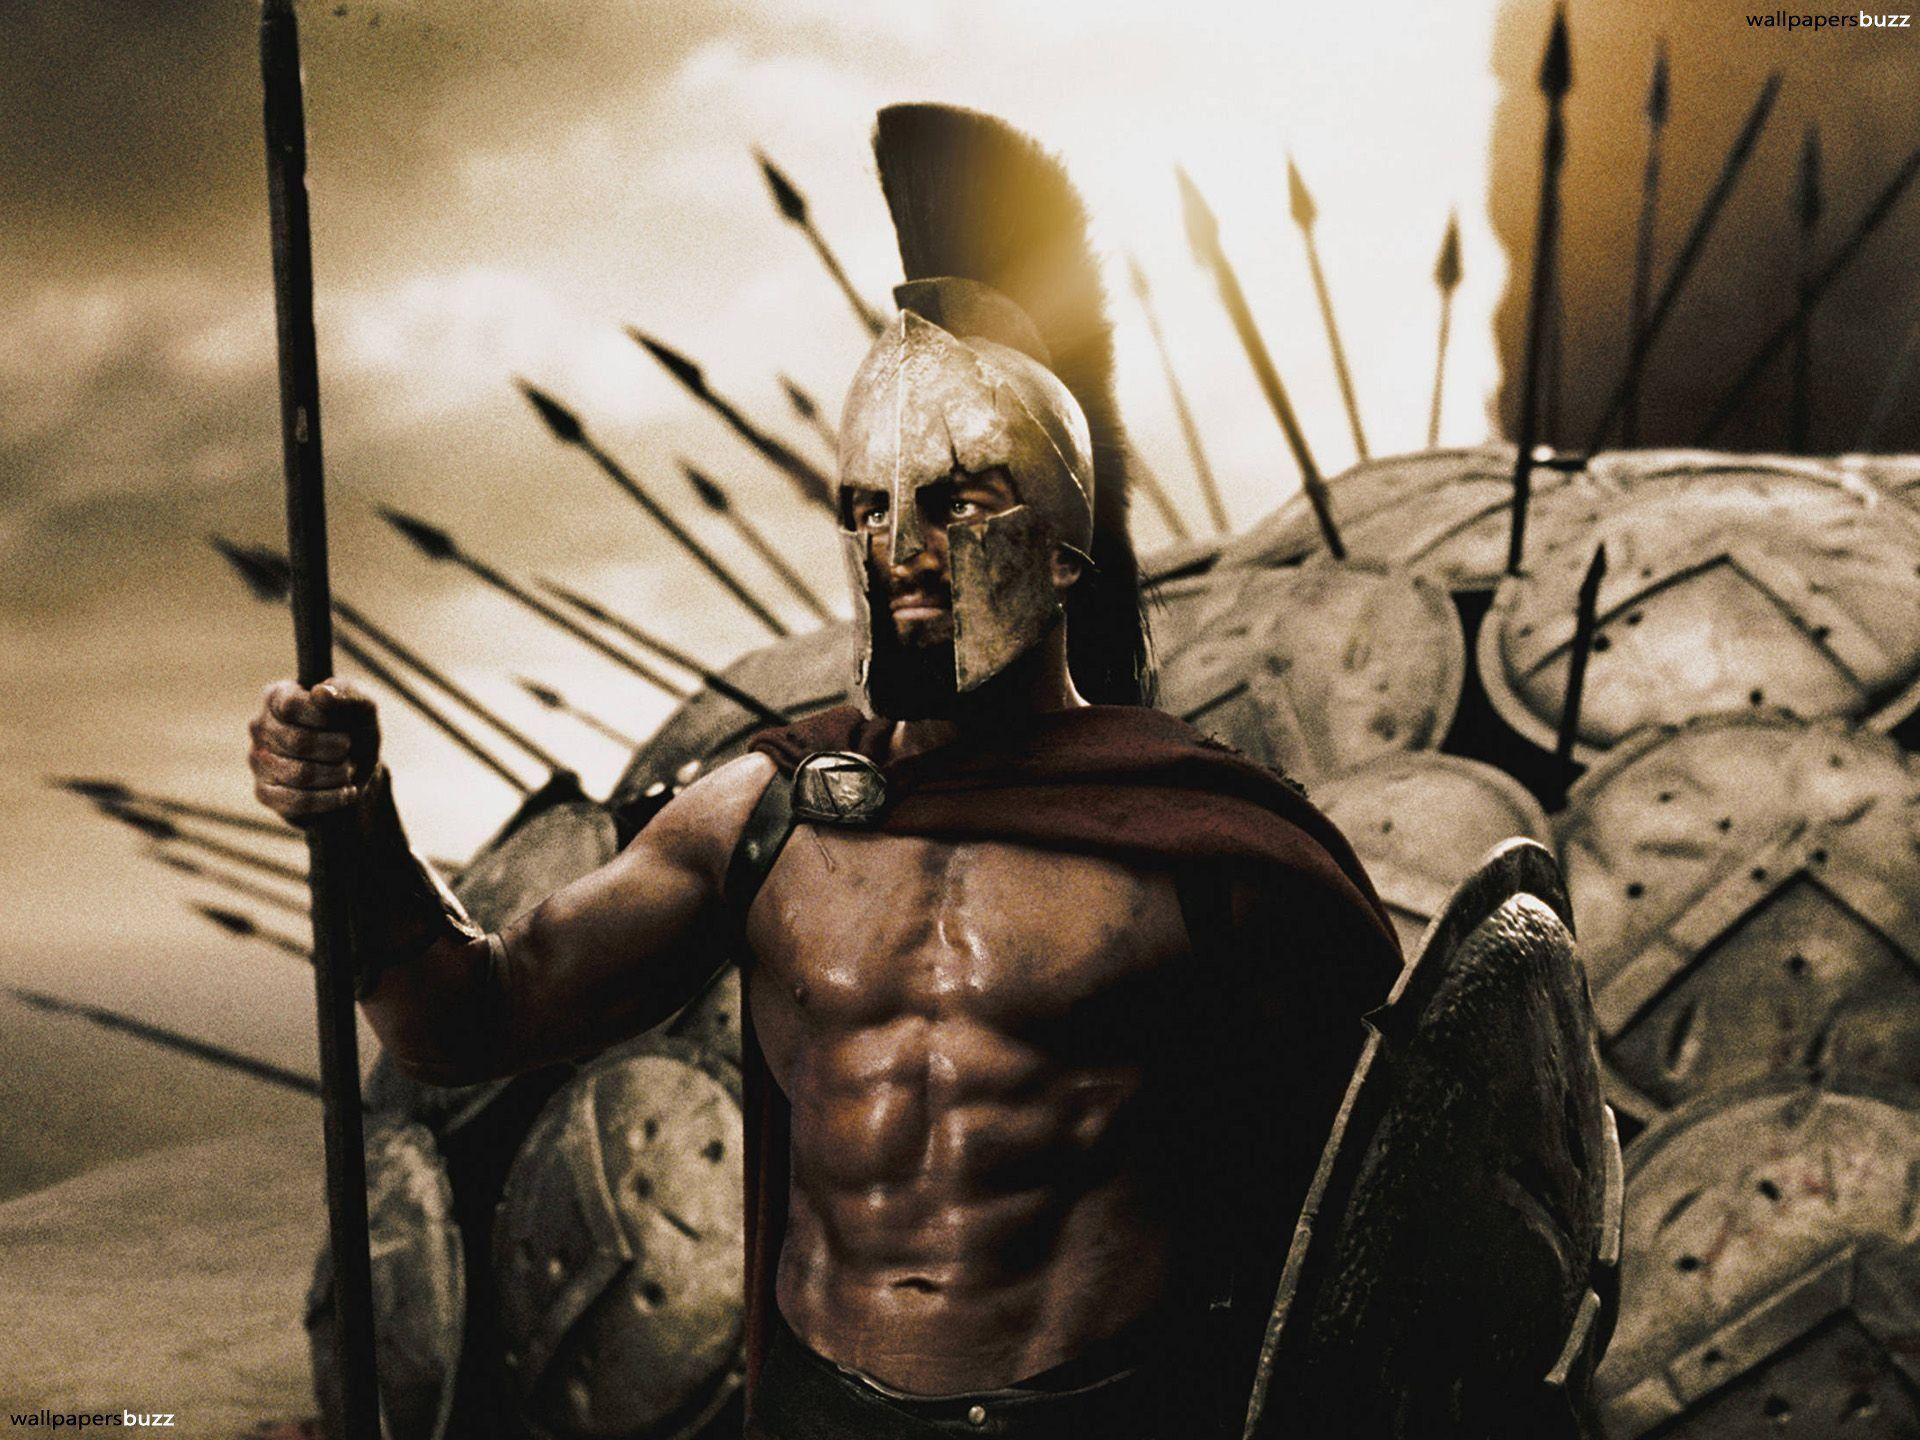 HD wallpaper 300 spartan warrior rage strong gerard butler king  leonidas  Wallpaper Flare